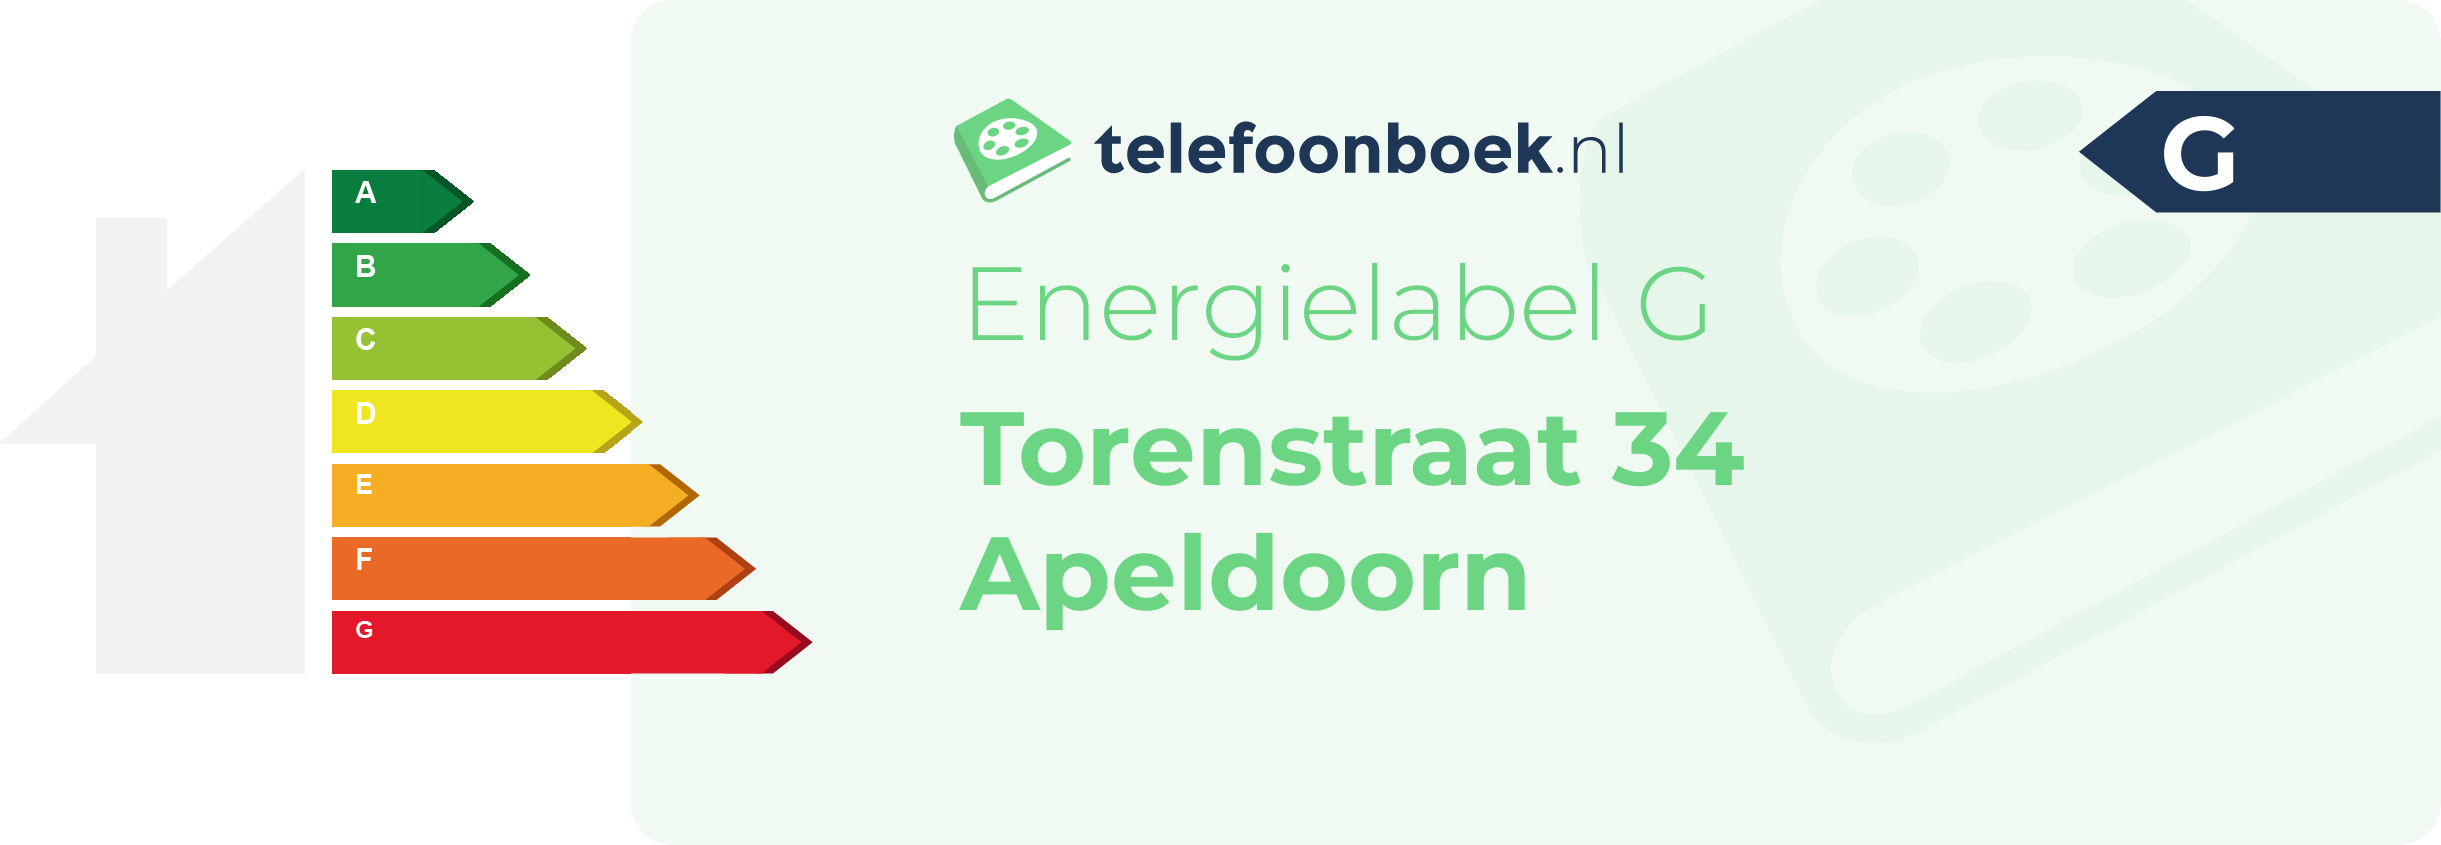 Energielabel Torenstraat 34 Apeldoorn